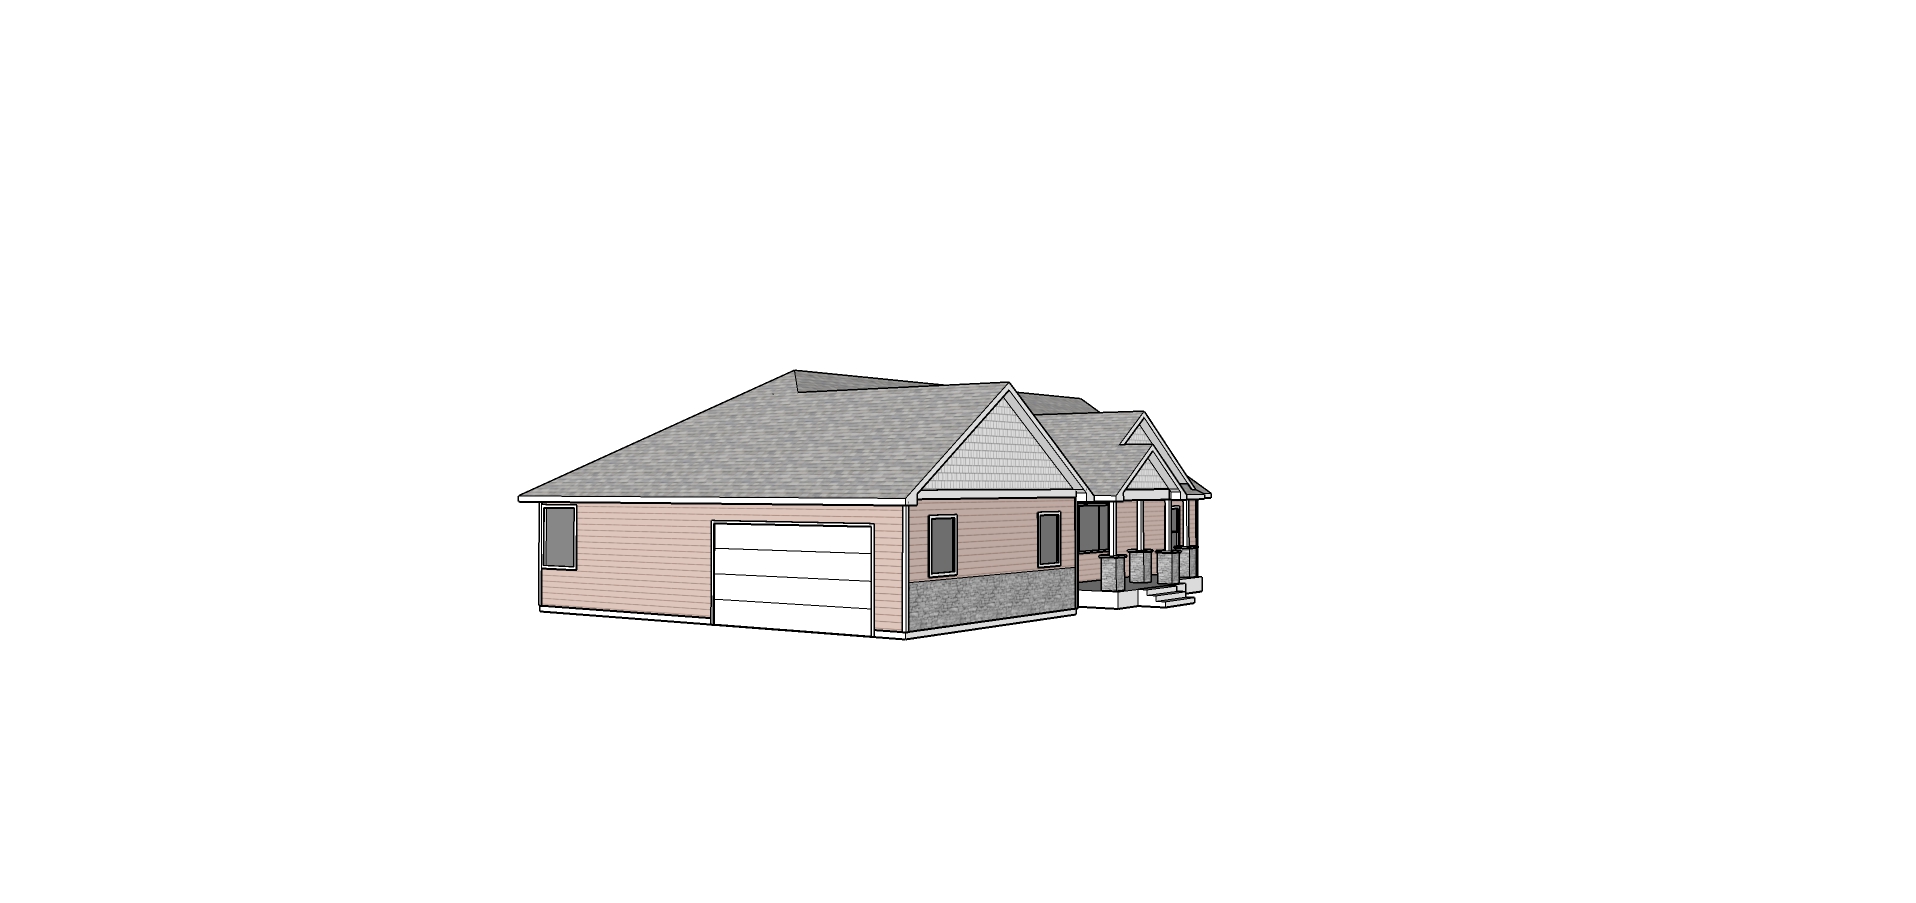 Side view of a one level Spokane House Plan by Spokane Home Design.